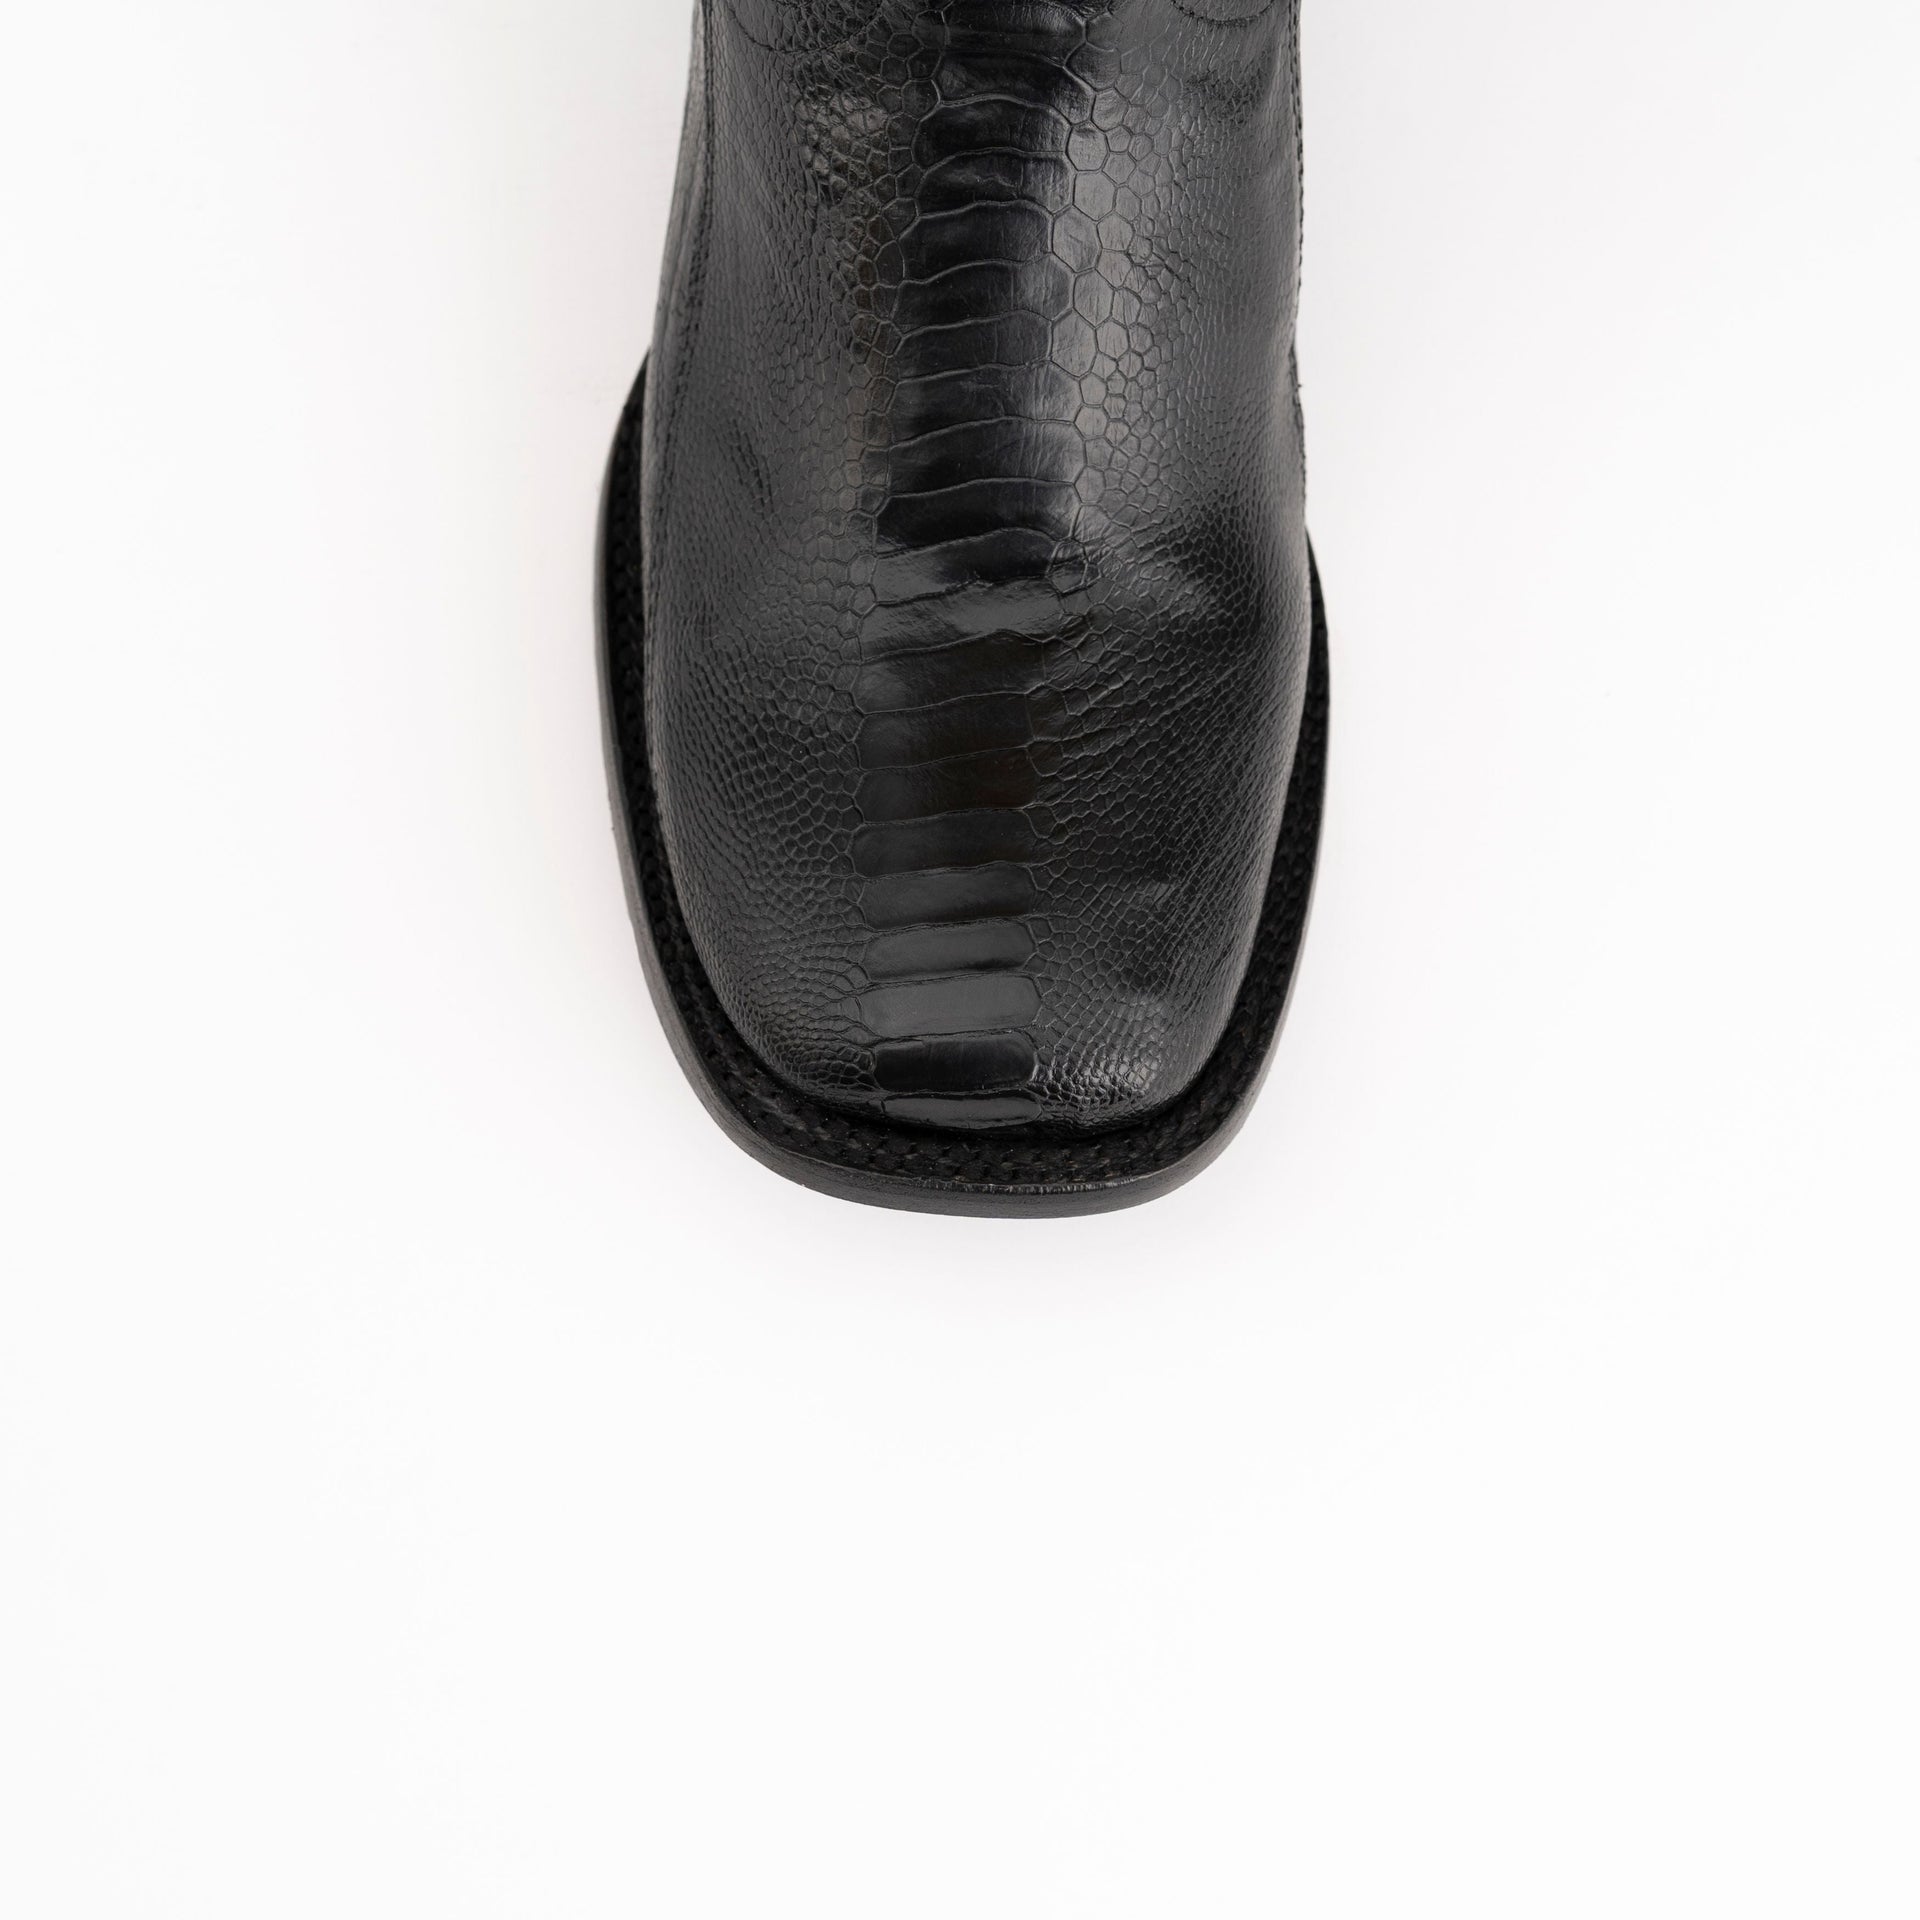 Men's Ferrini Nash Ostrich Leg Boots Handcrafted Black - yeehawcowboy